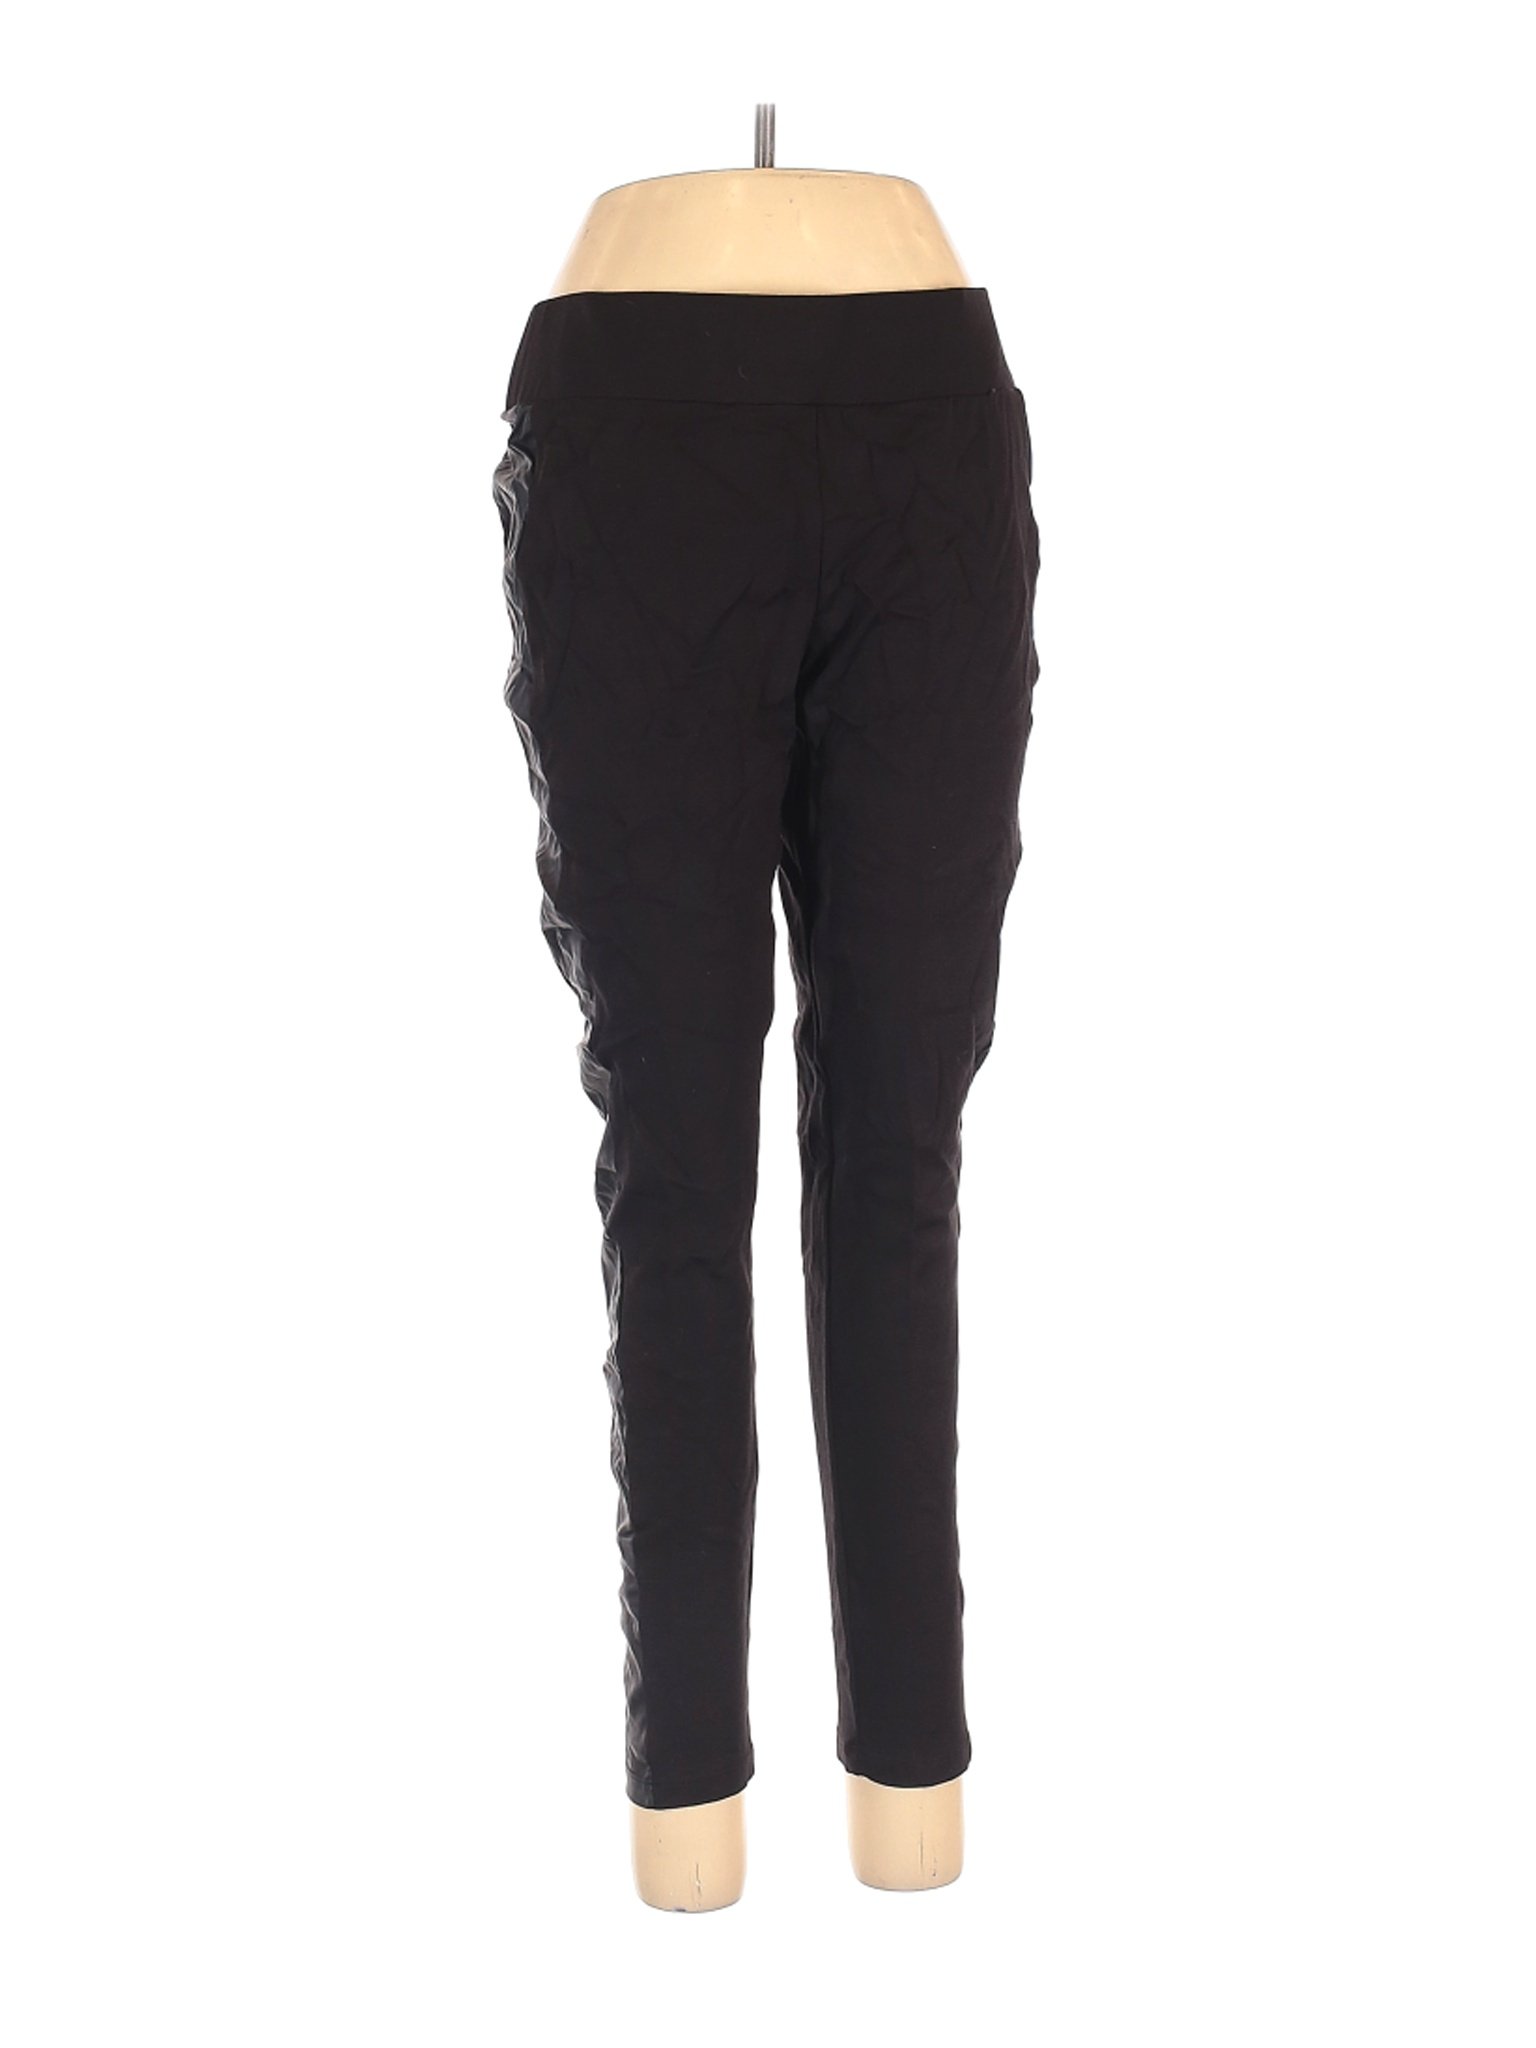 Maurices Women Black Casual Pants XL | eBay